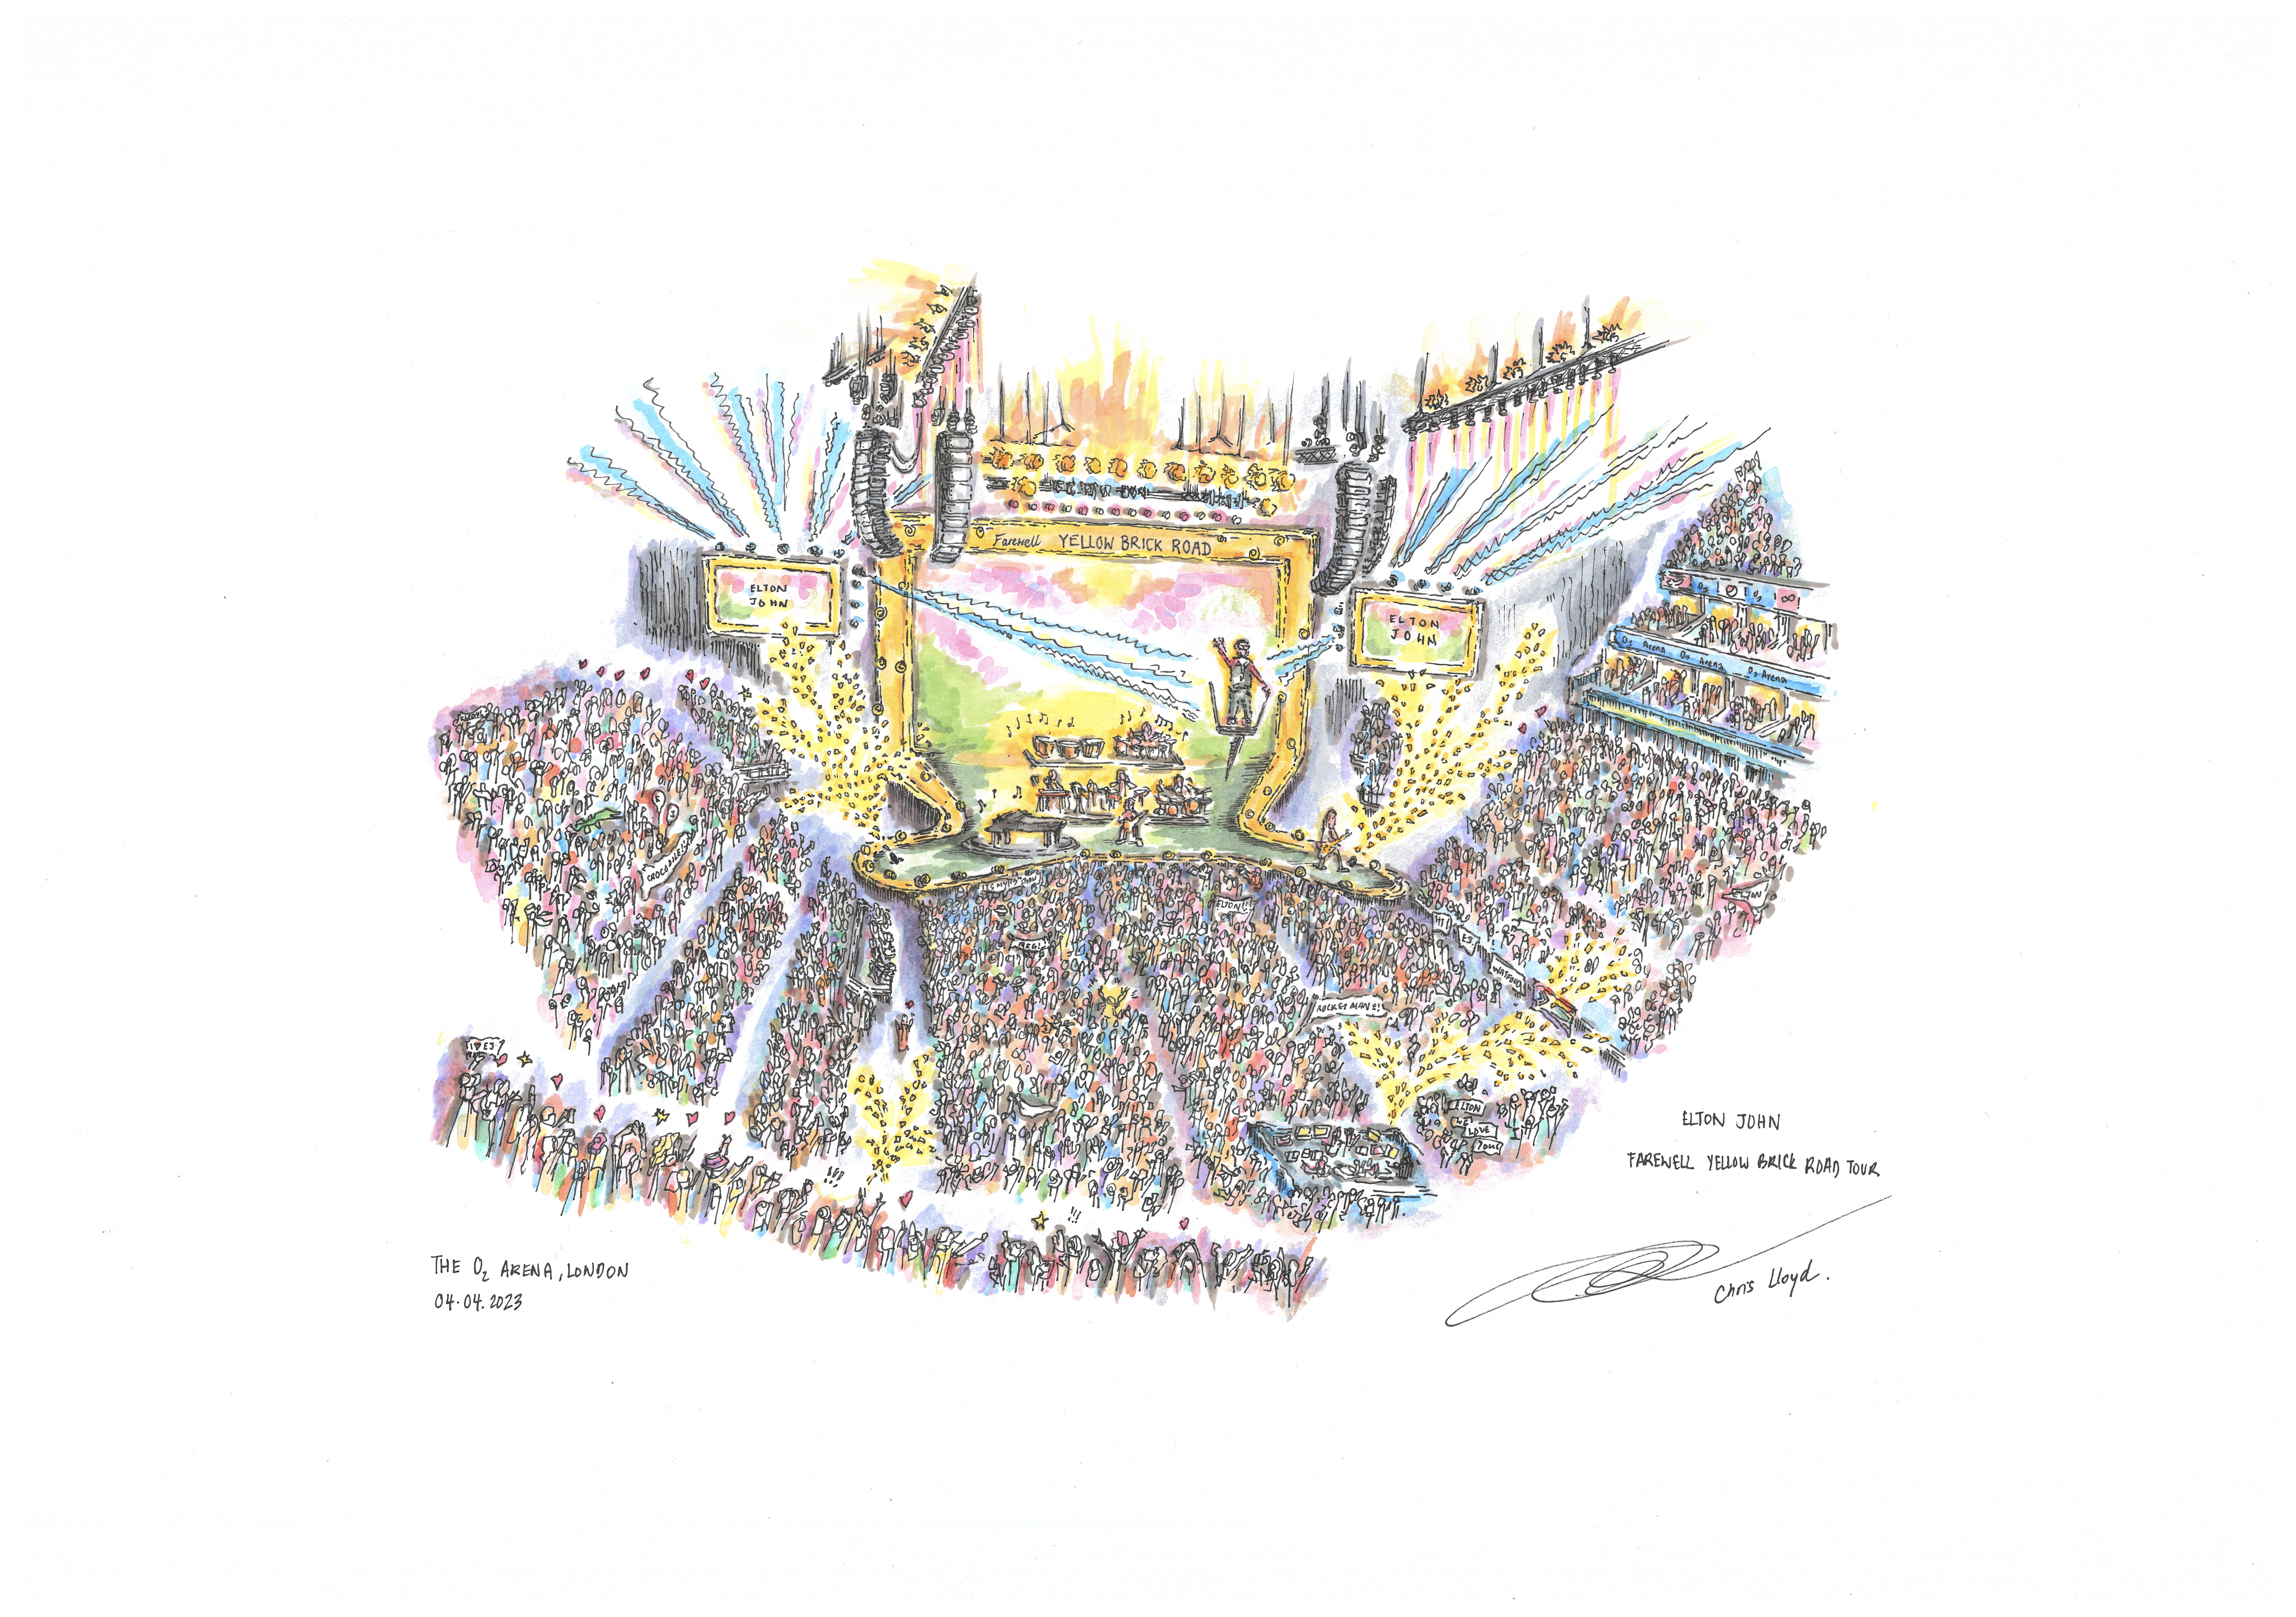 Chris Lloyd artist who draws concerts